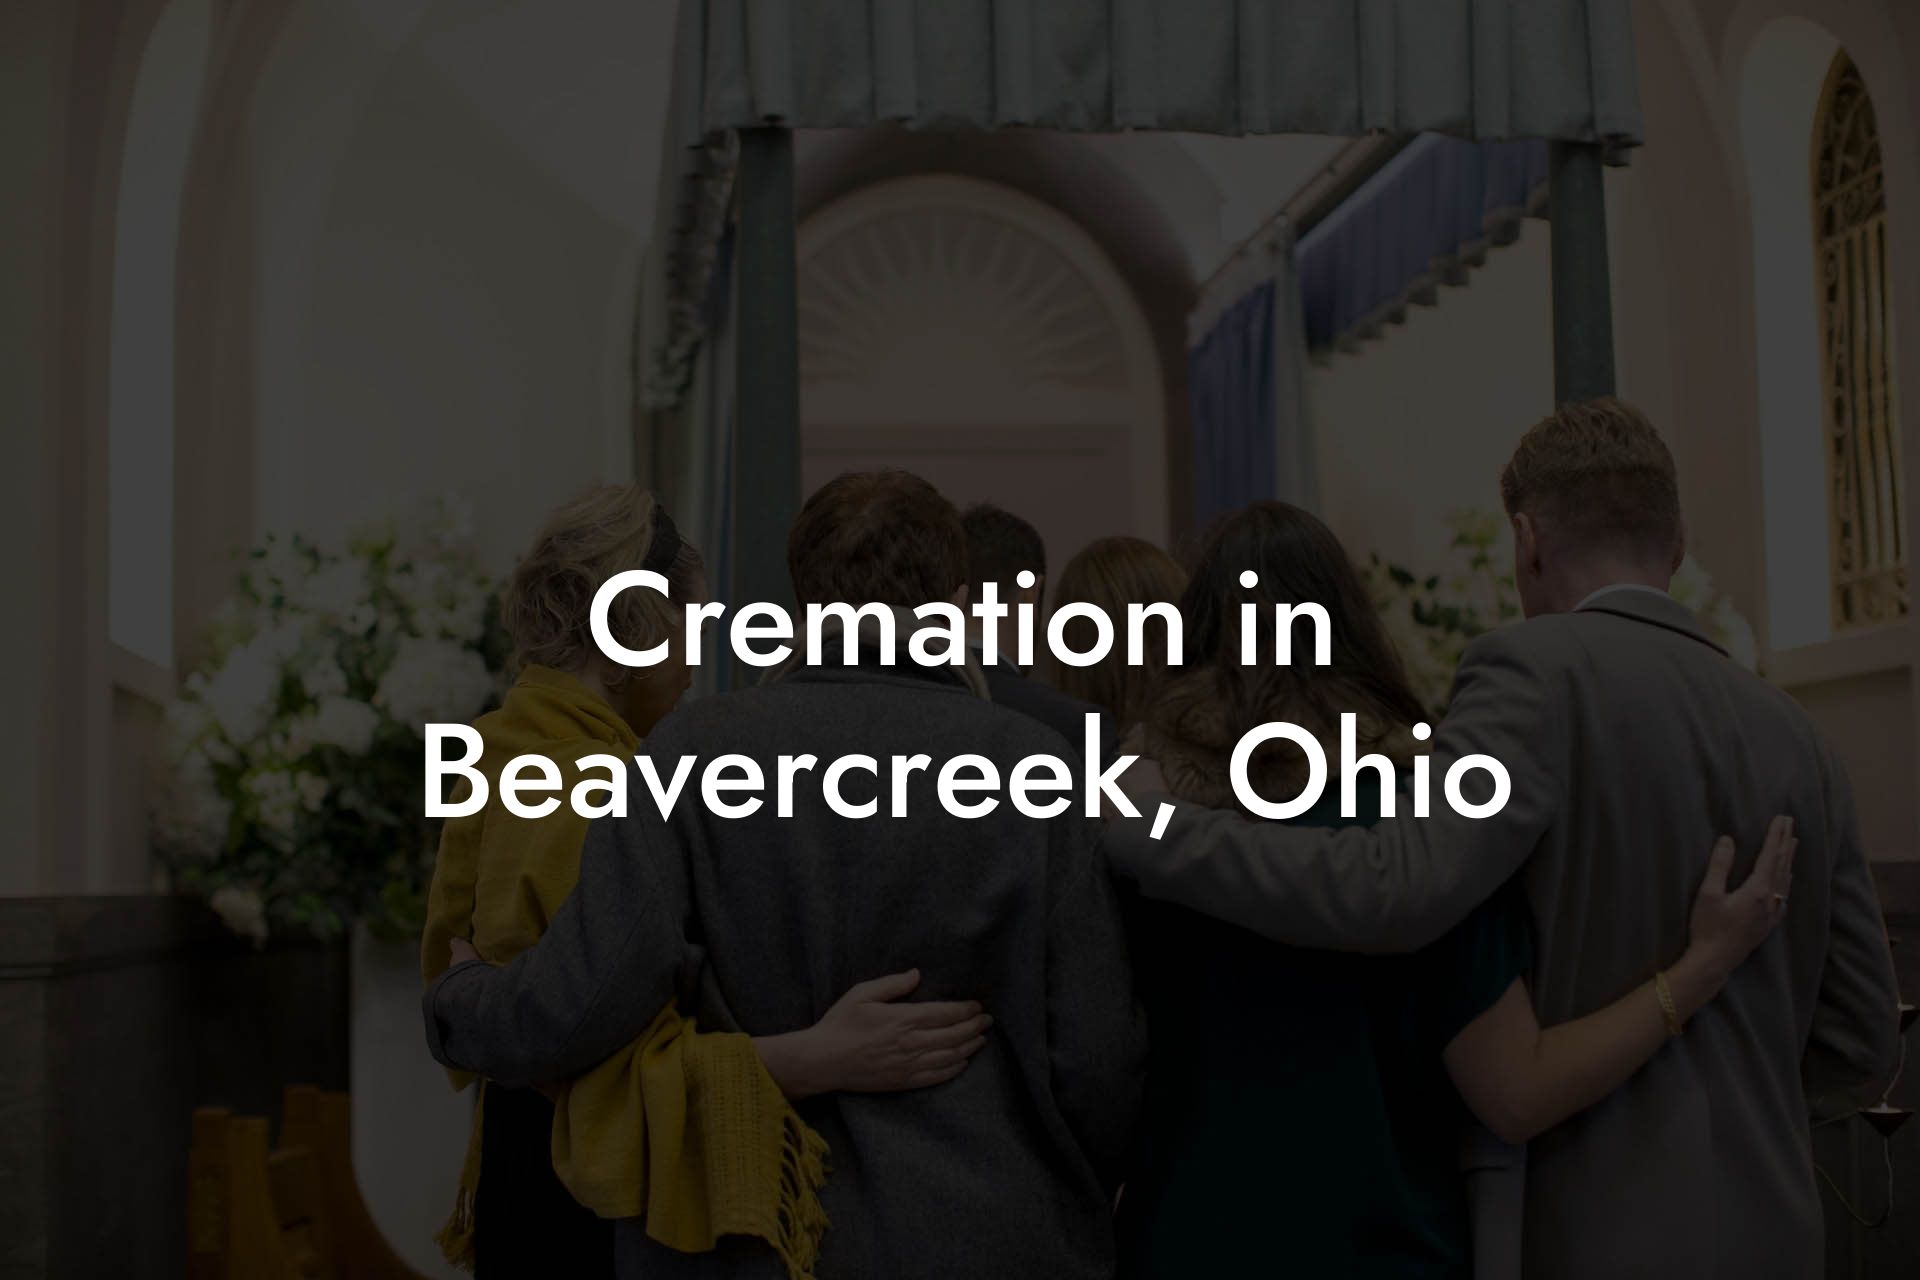 Cremation in Beavercreek, Ohio